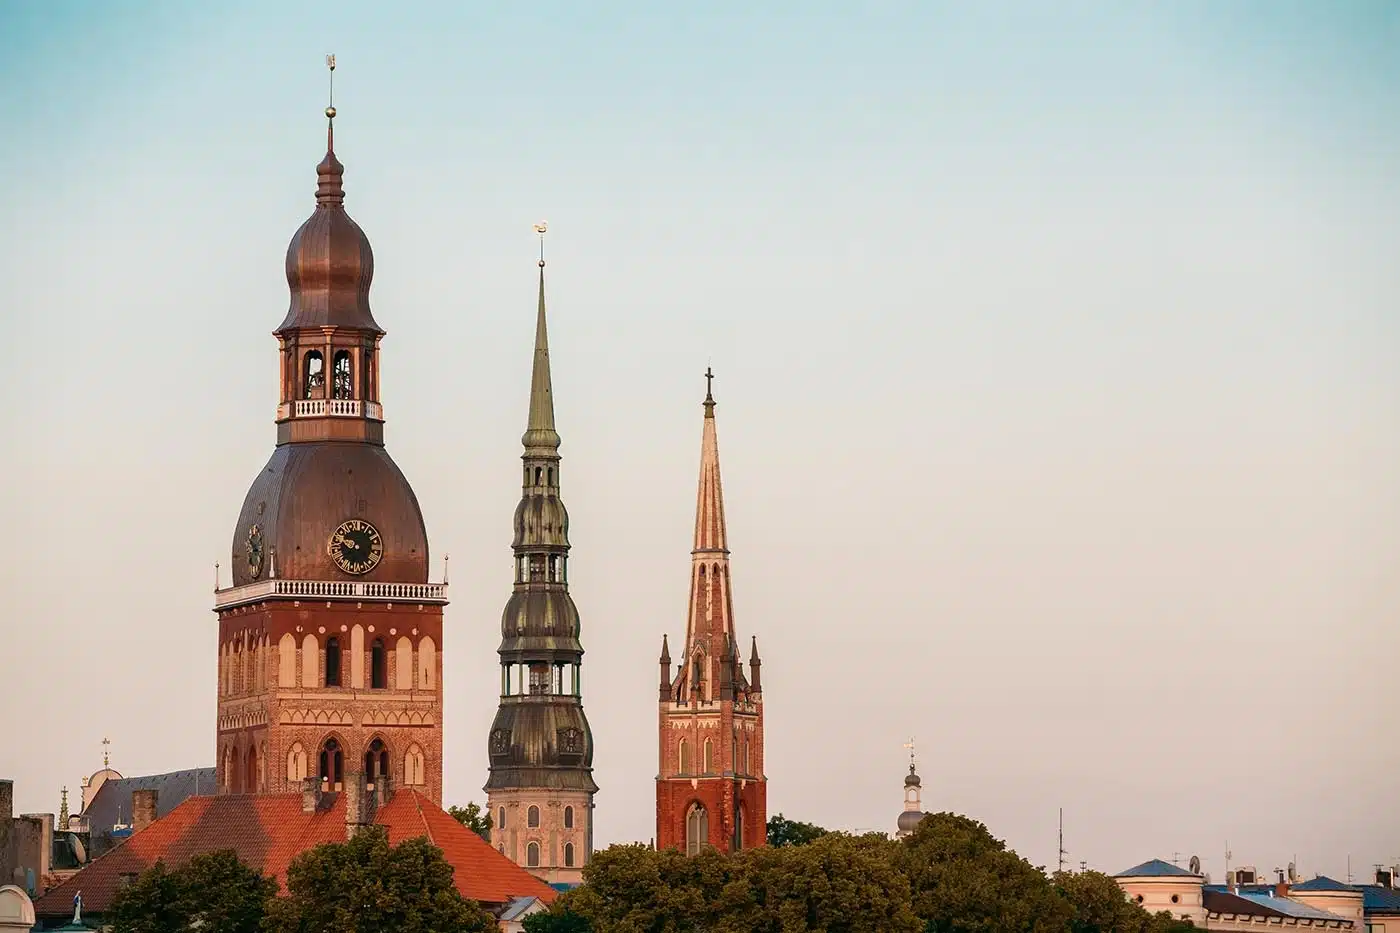 Riga Cathedral - Riga- Best Things to do in Riga, Latvia - The coolest city break in Europe #europe #citybreak #riga #traveldestinations #latvia 